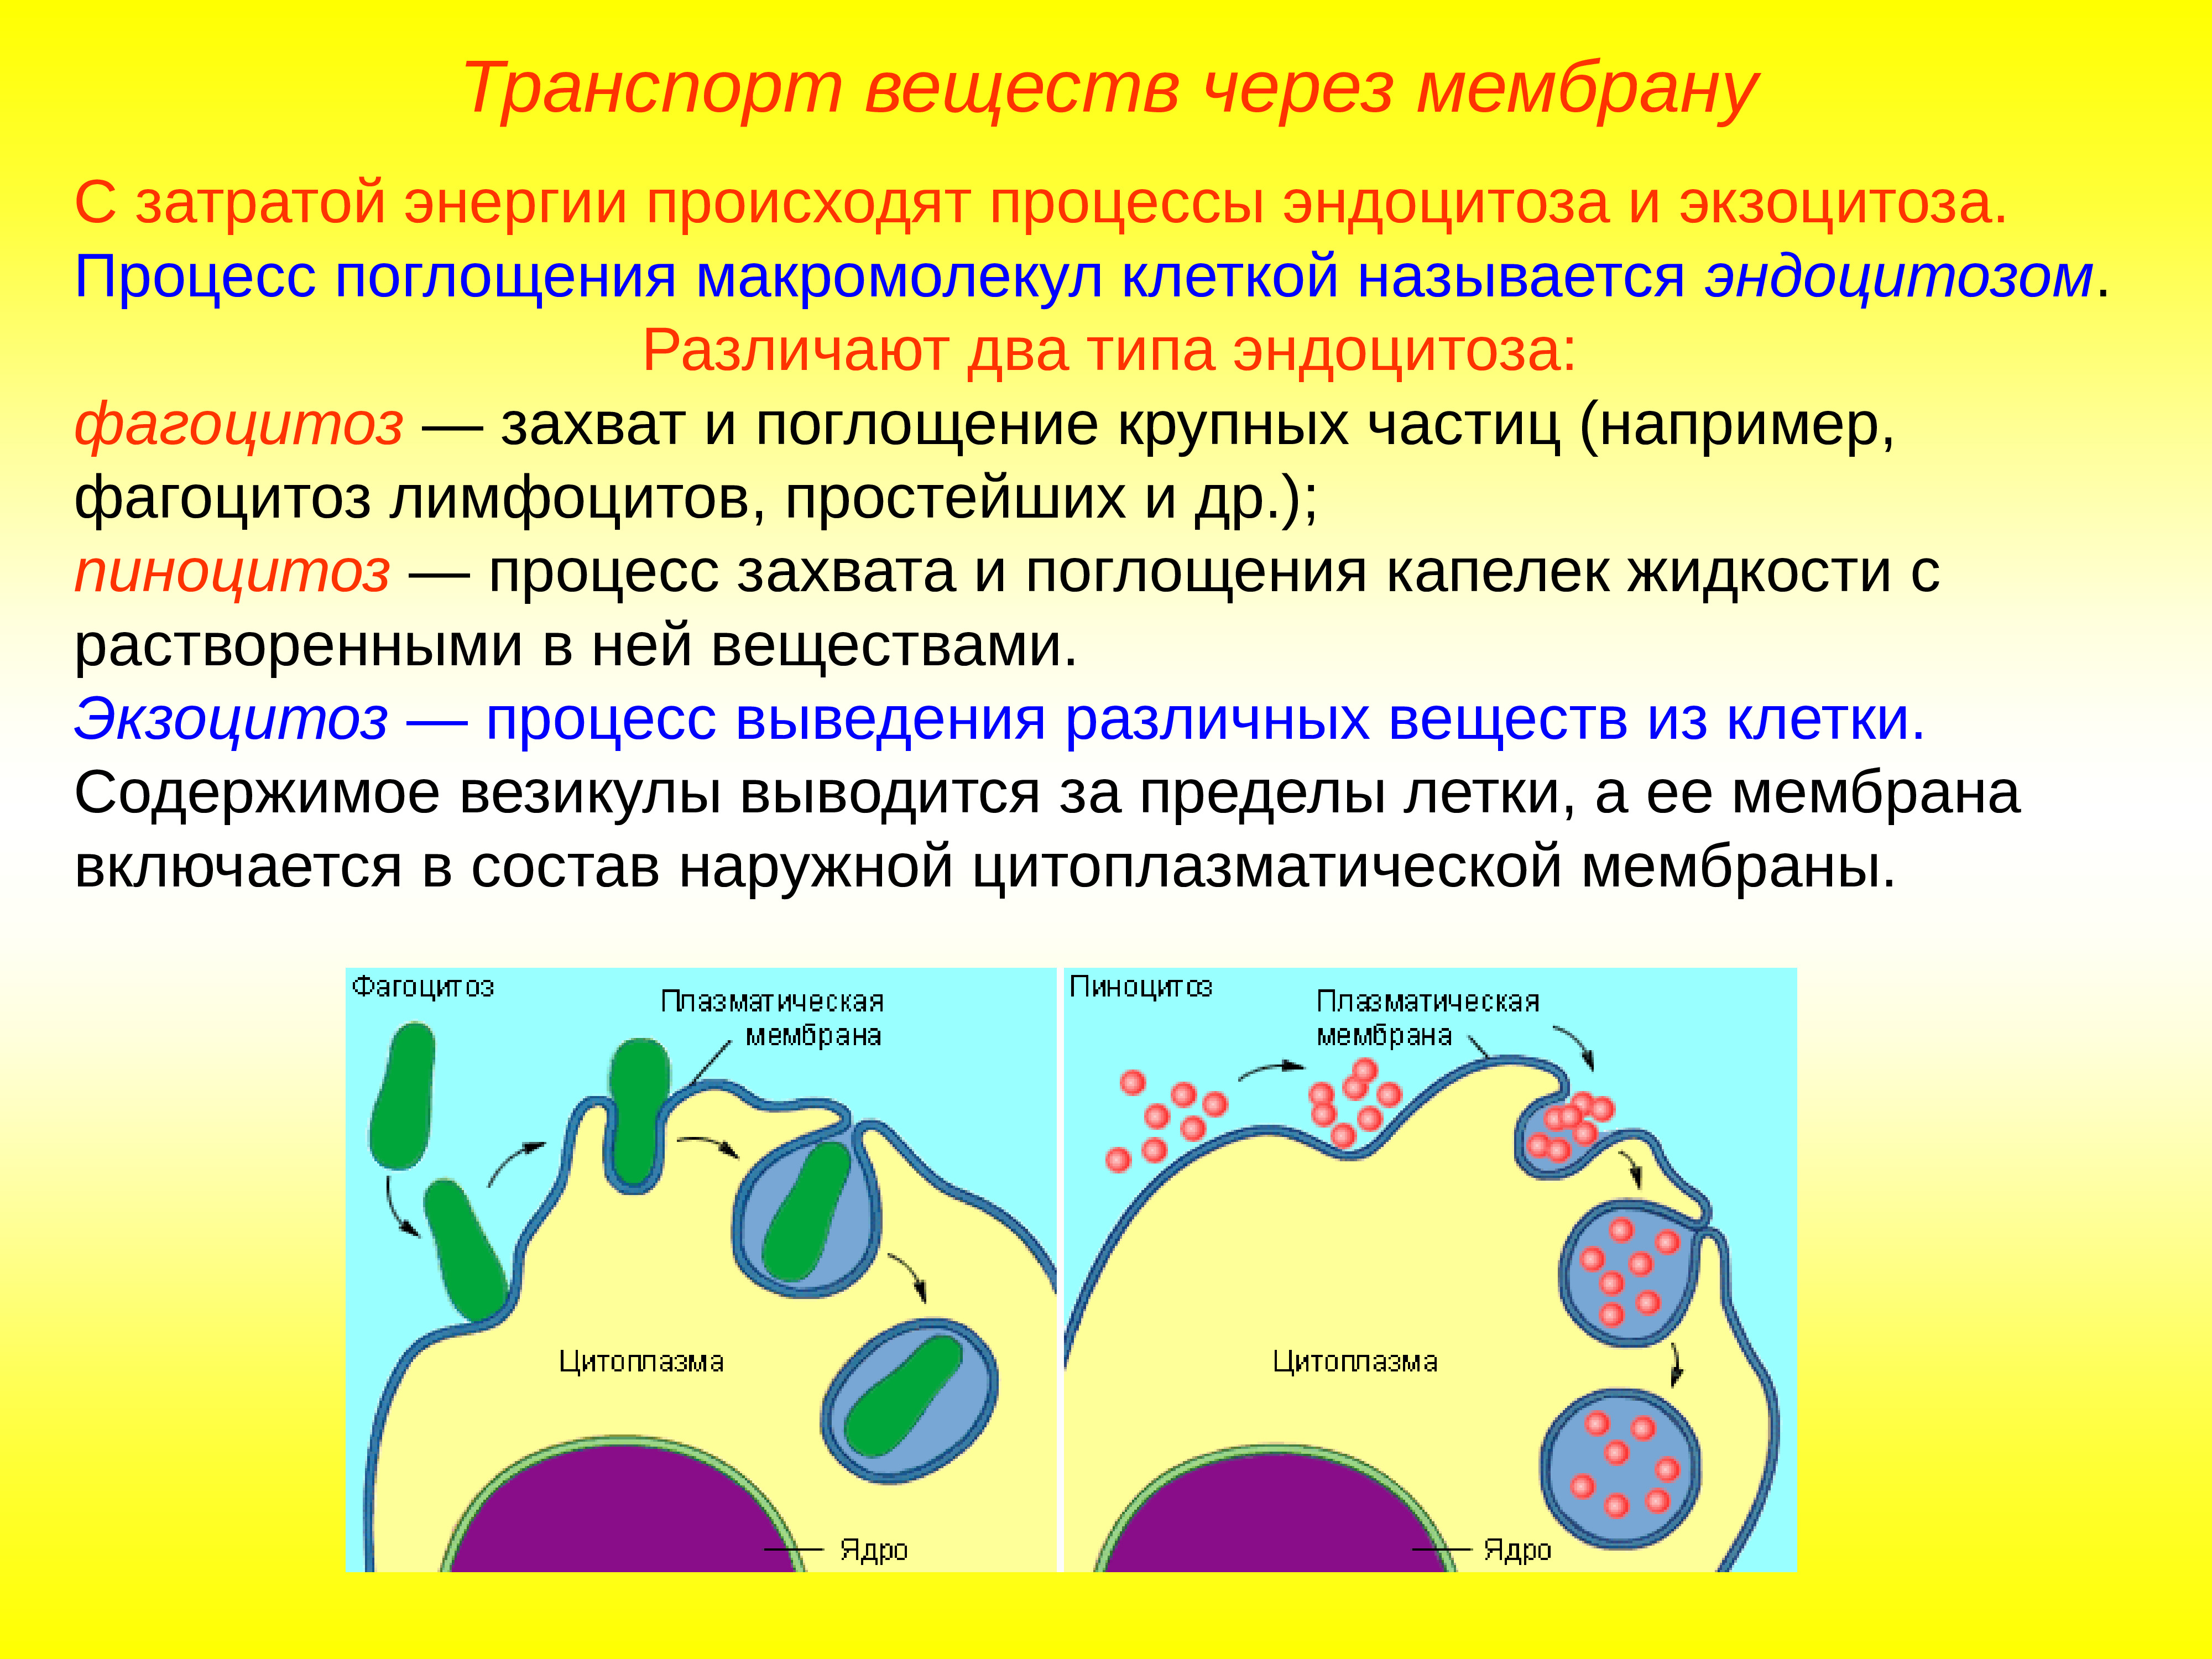 Фагоцитоз захват клеткой. Фагоцитоз пиноцитоз эндоцитоз экзоцитоз. Клеточная мембрана эндоцитоз. Экзоцитоз и эндоцитоз плазматическую мембрану. Плазматическая мембрана эндоцитоз.